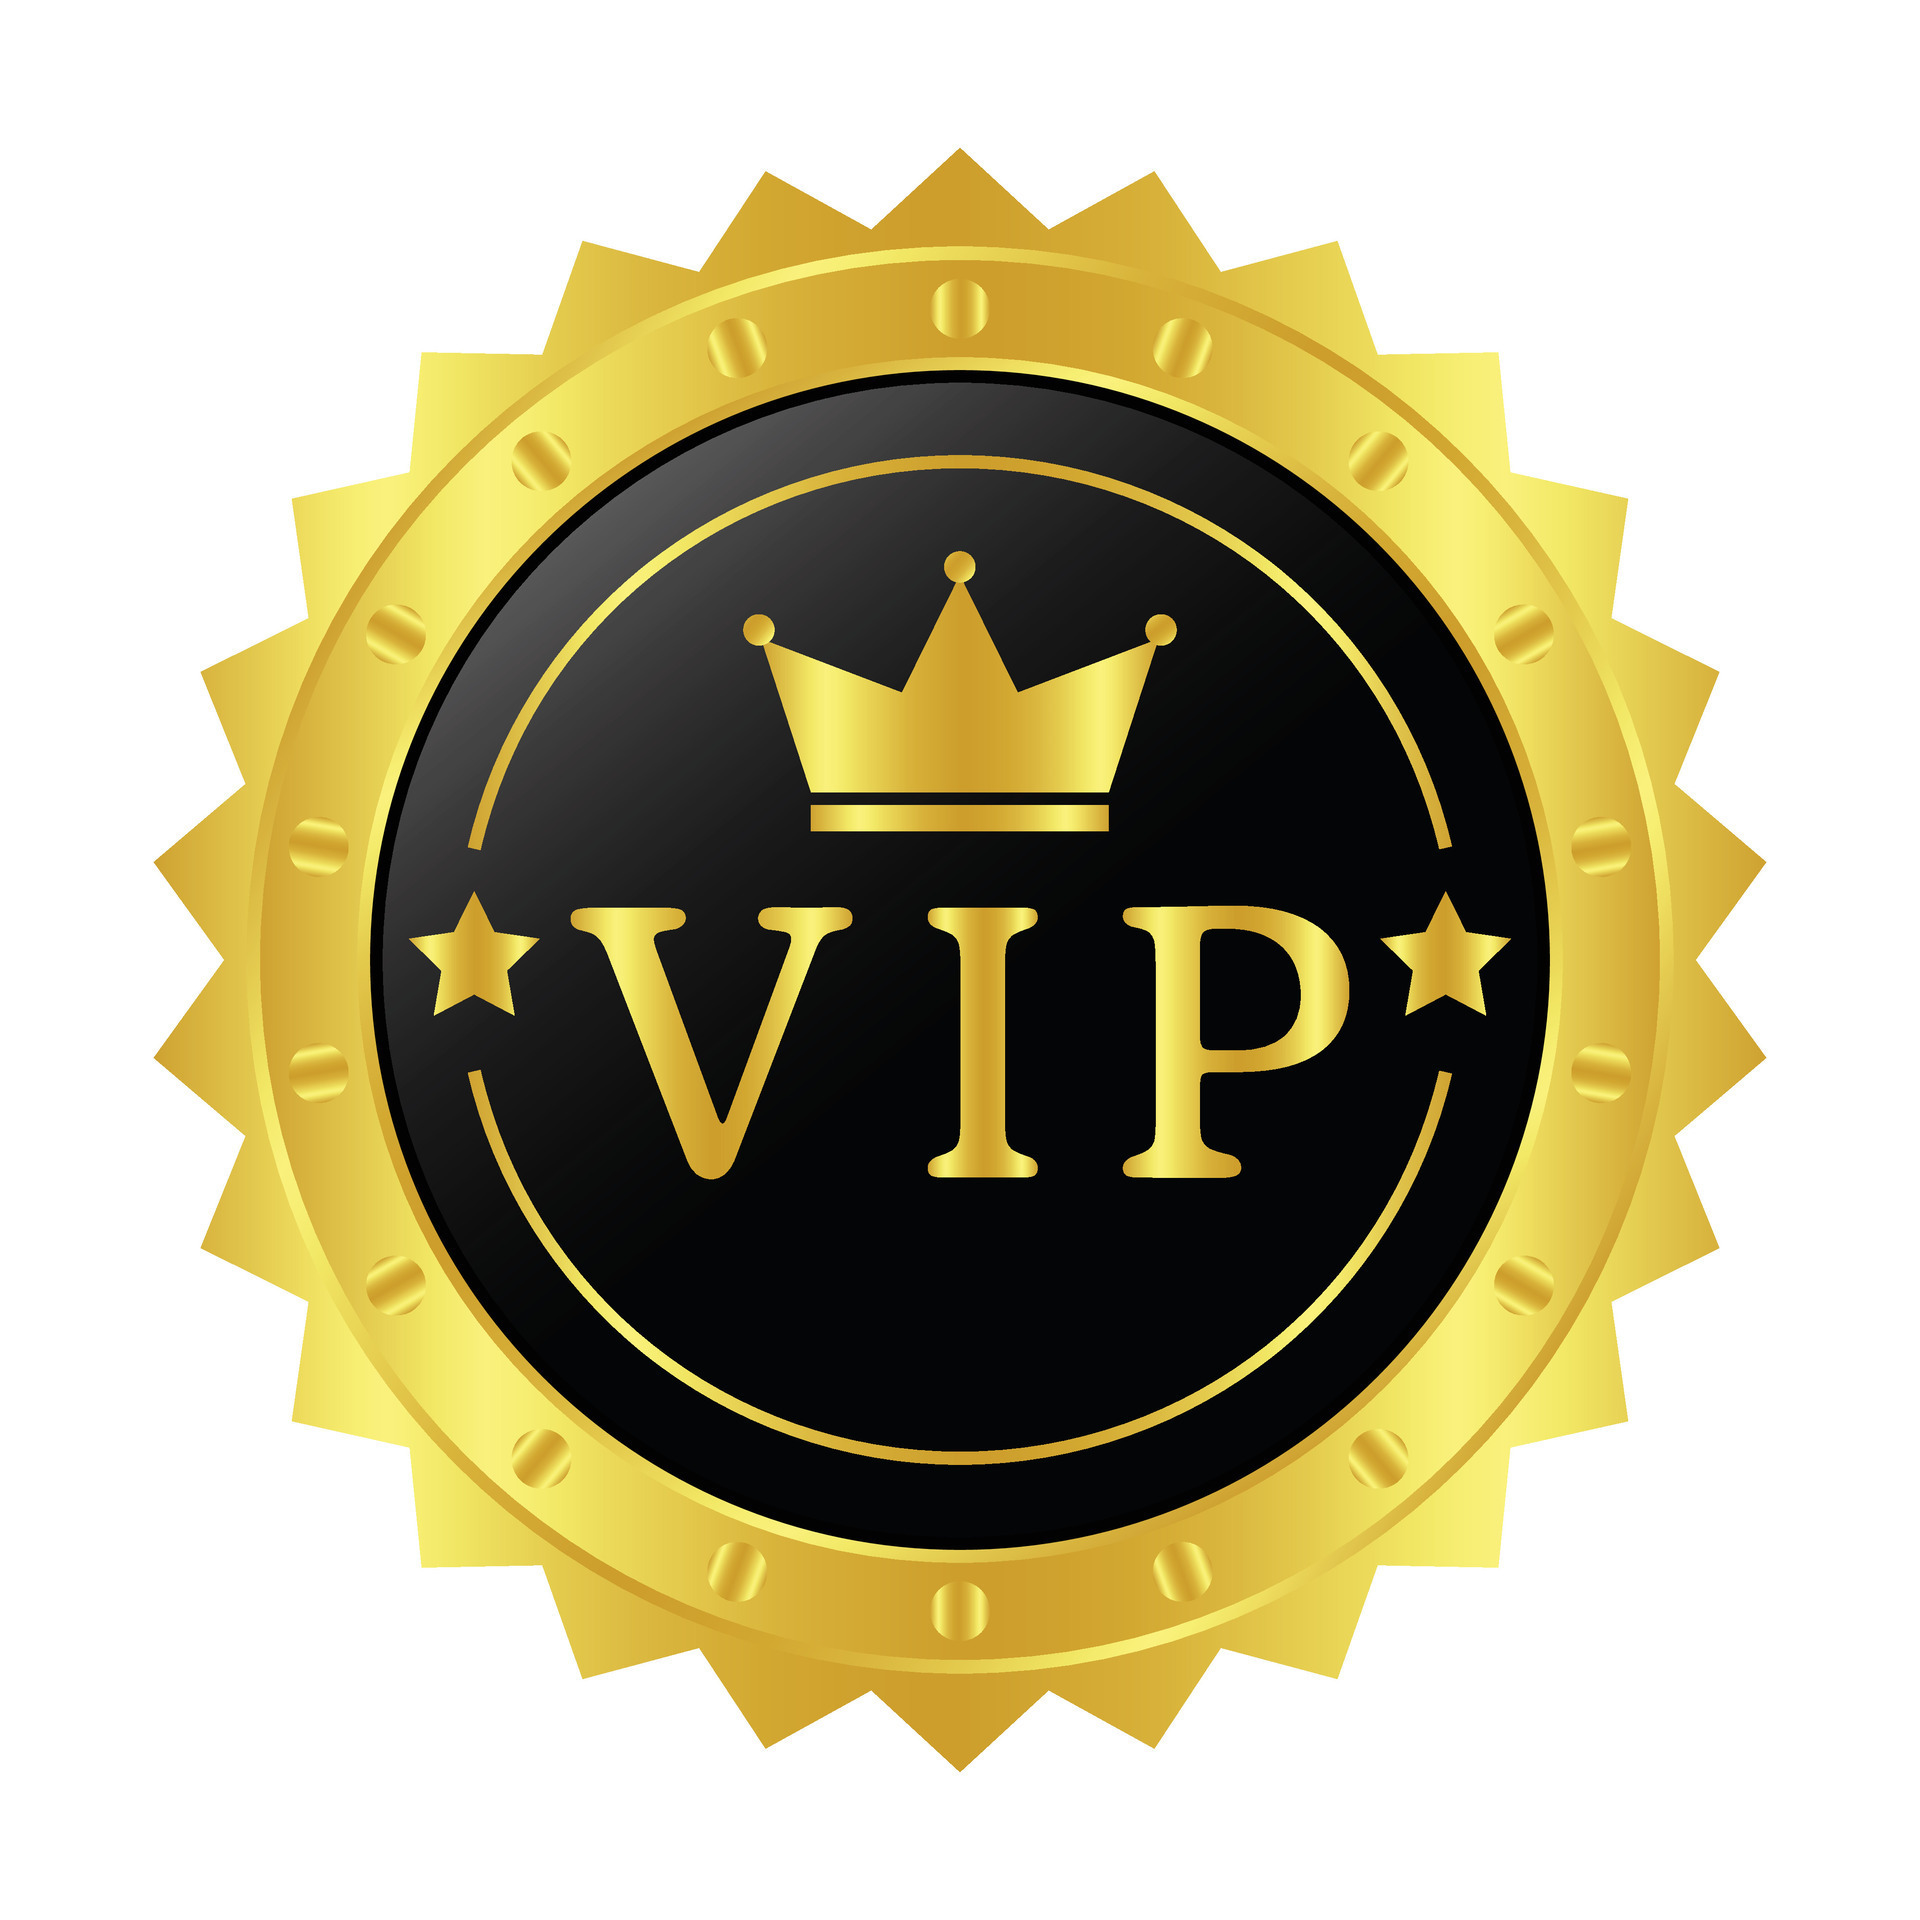 Vip club logo luxury golden badge Royalty Free Vector Image